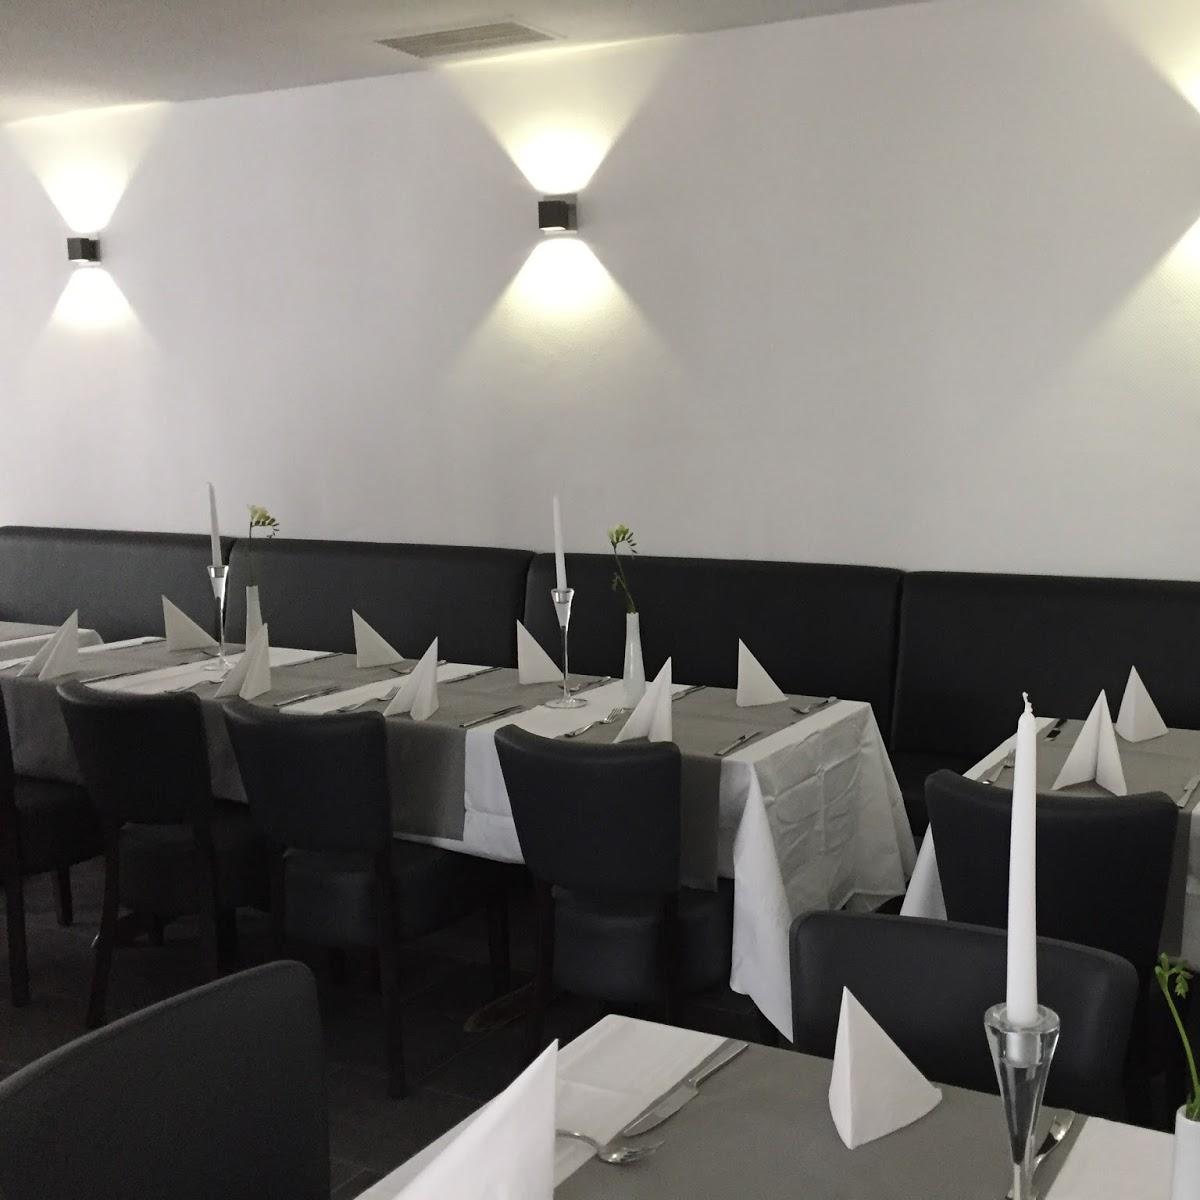 Restaurant "Palast Italia" in Bielefeld